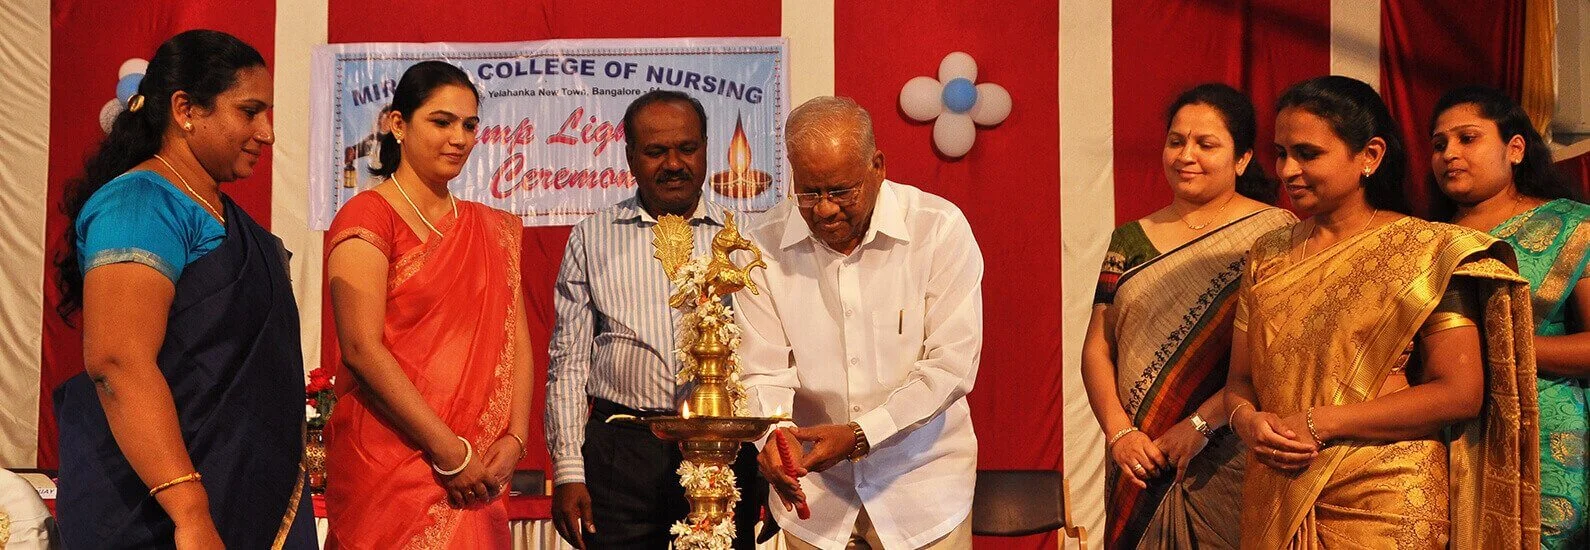 Chairman of Miranda College of Nursing, Prof. S.N. Katarki, Inaugurates the Lamp Ceremony.